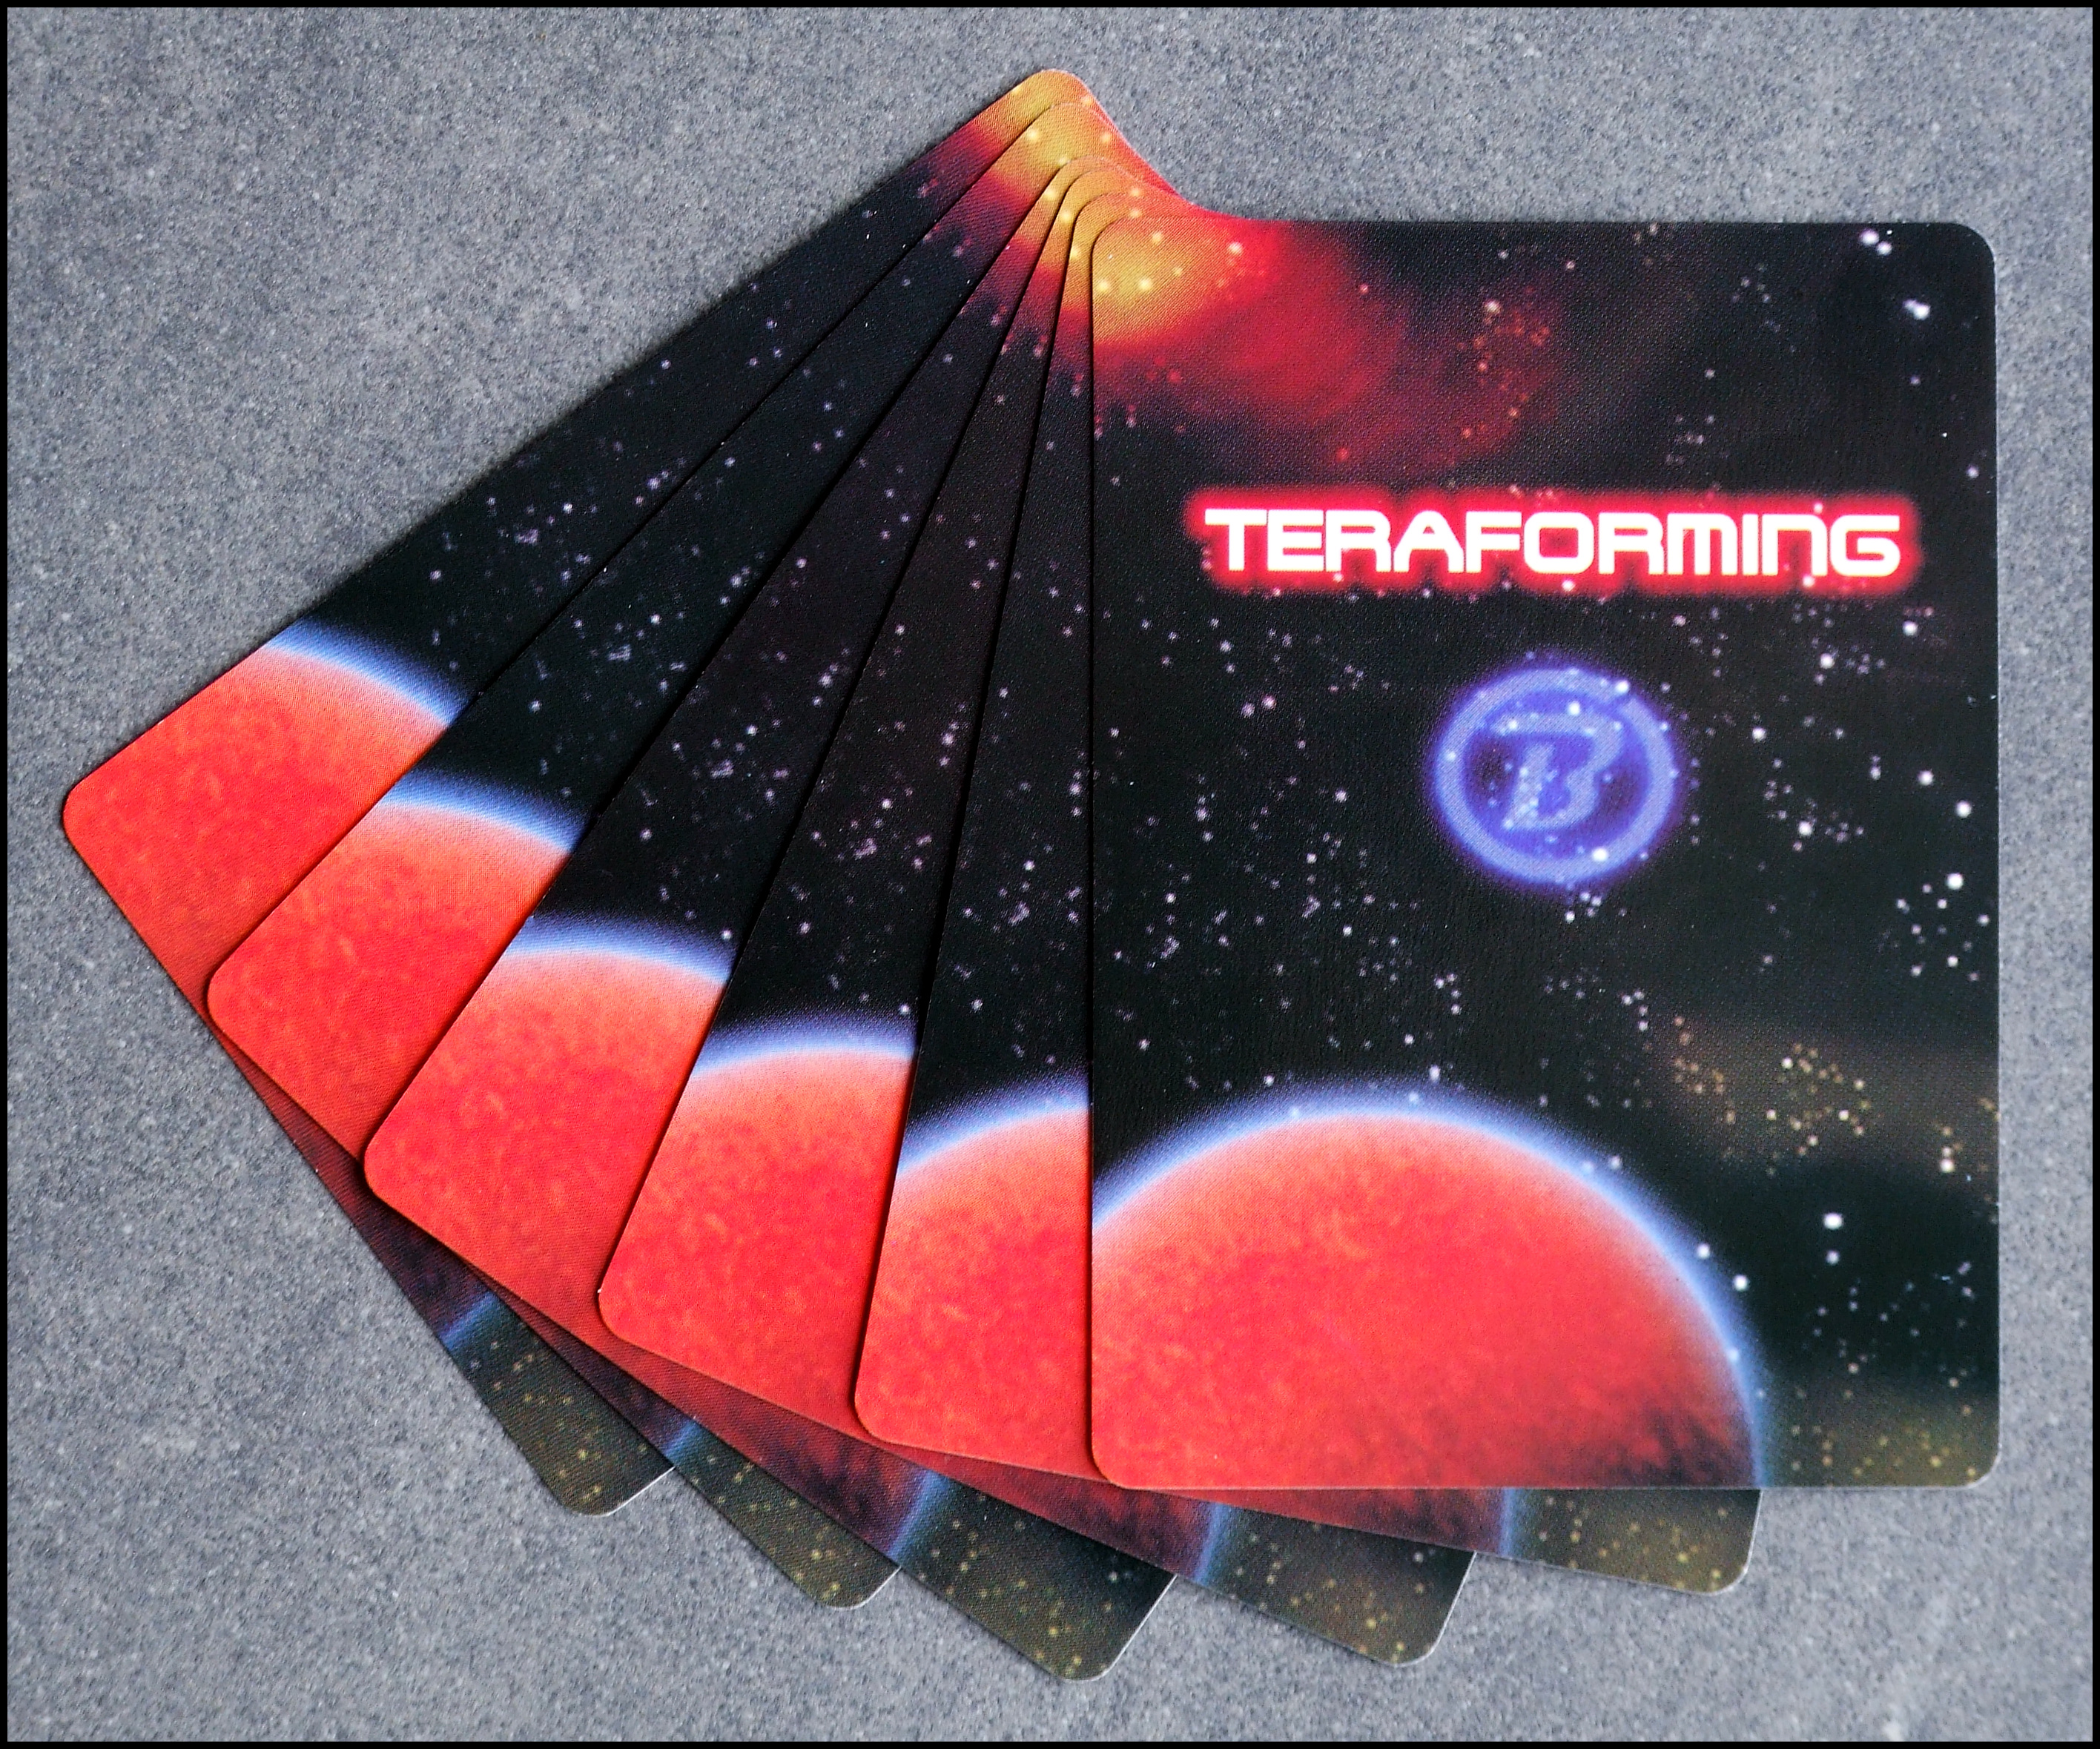 Teraforming - Card Backs